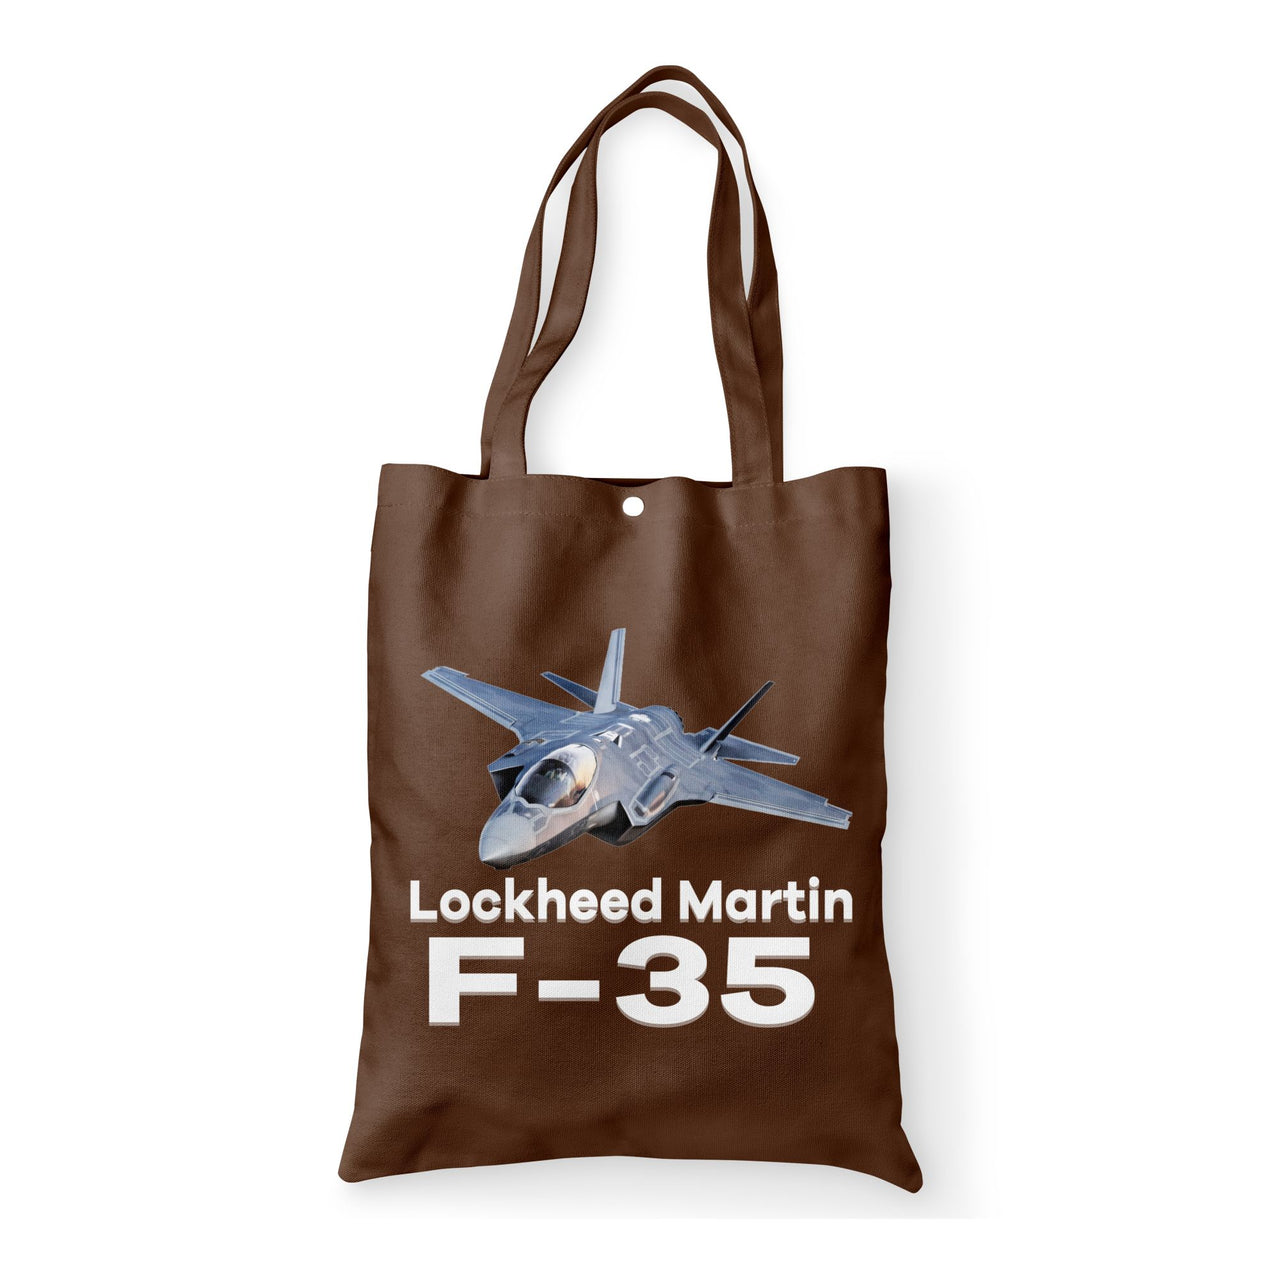 The Lockheed Martin F35 Designed Tote Bags